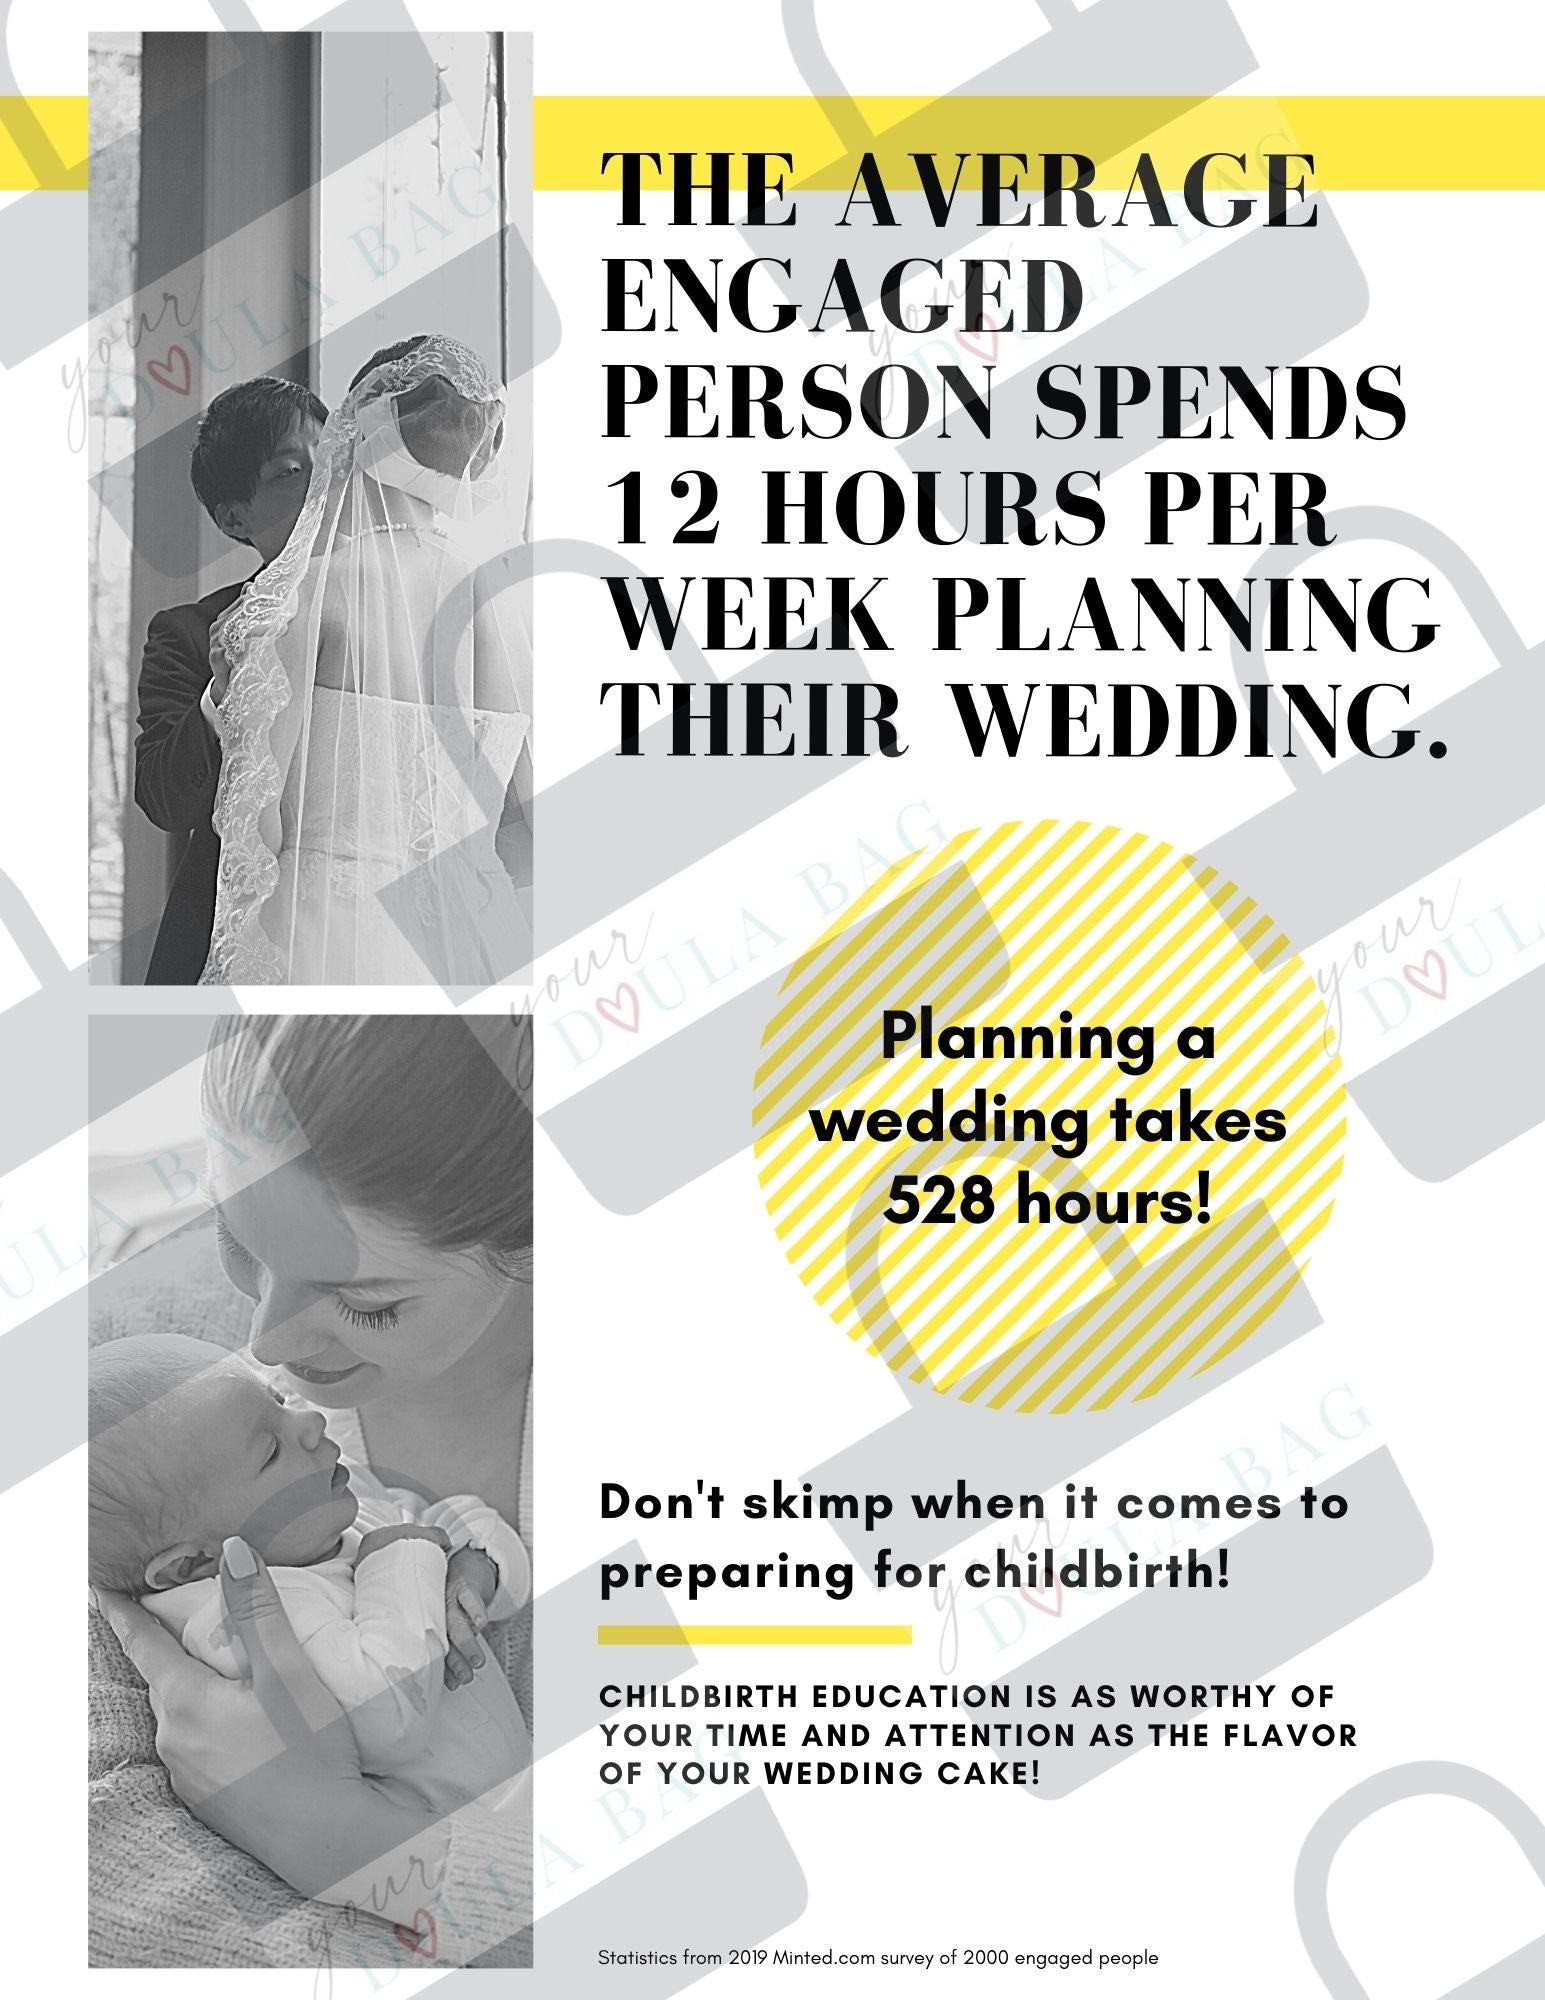 Childbirth Preparation vs. Wedding Preparation